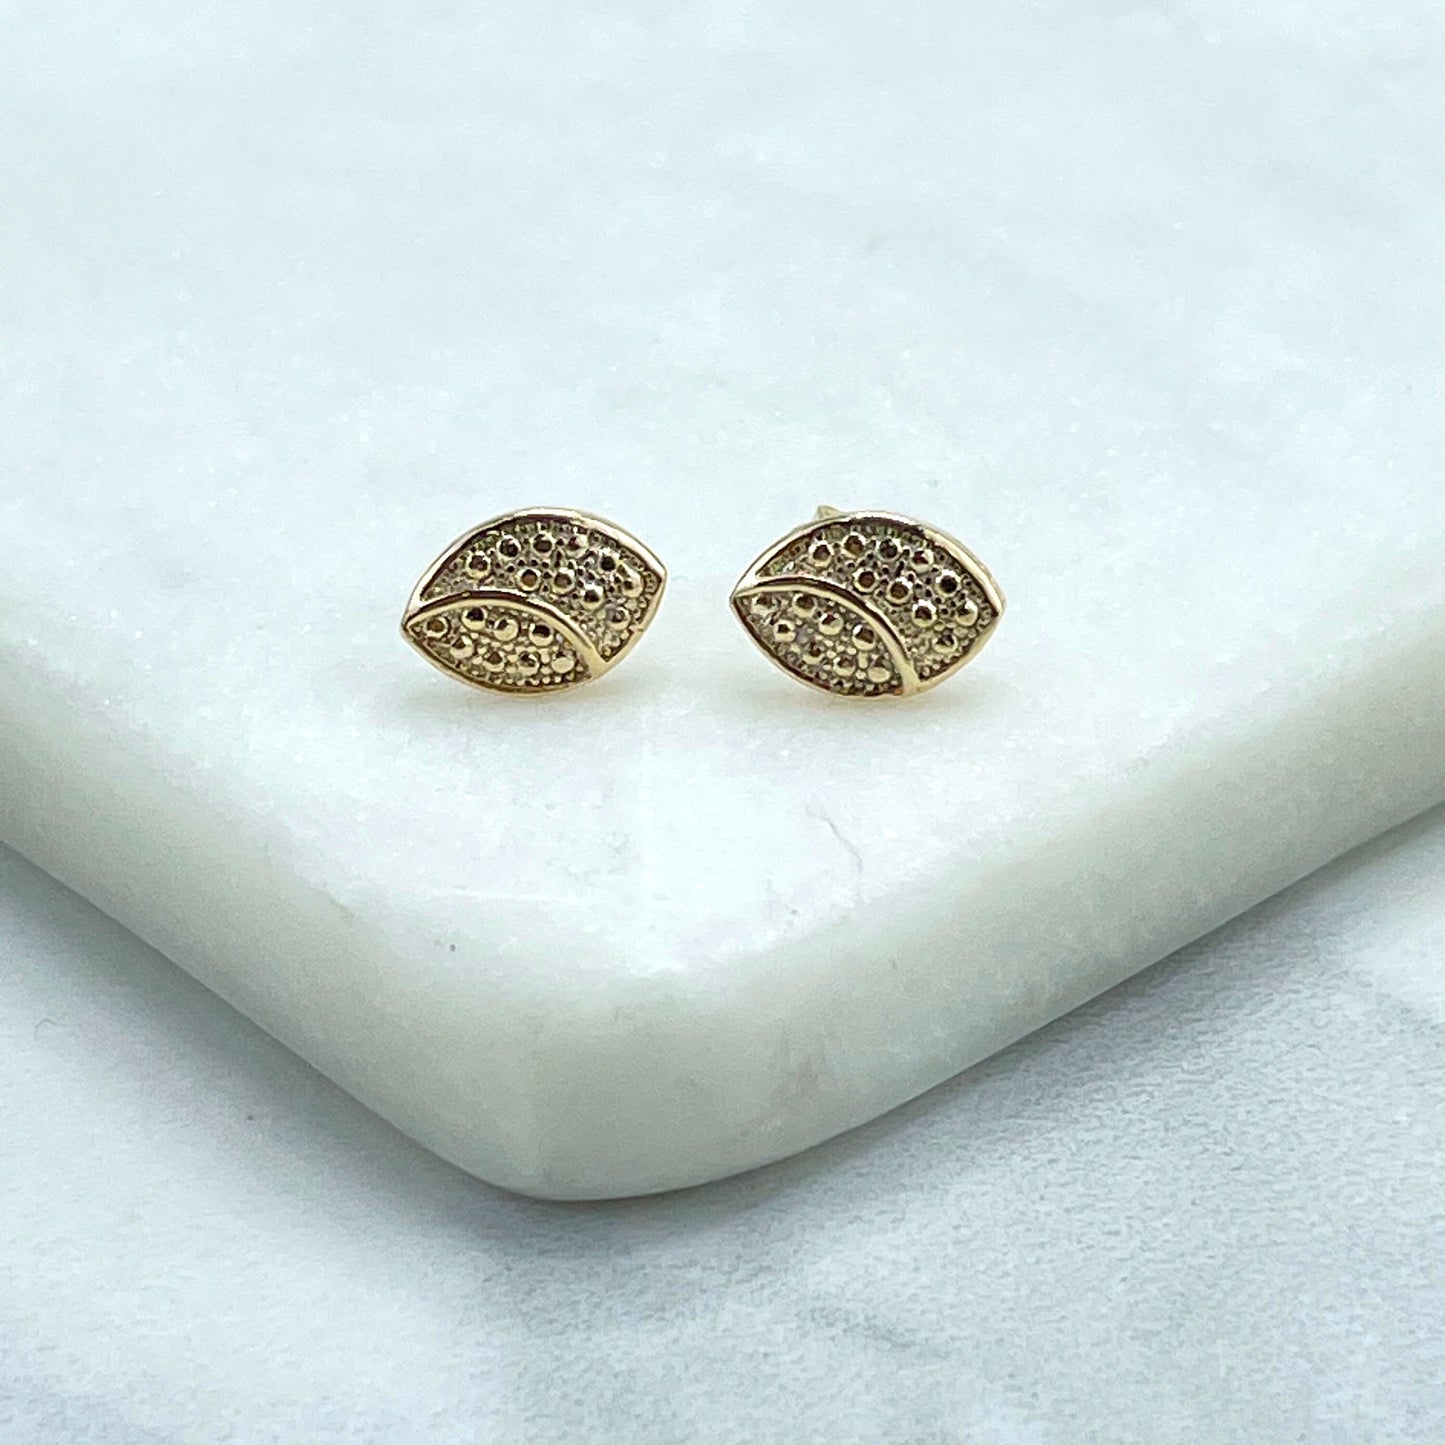 18k Gold Filled Texturized Leave Shape Design Pettie Stud Earrings, Wholesale Jewelry Making Supplies